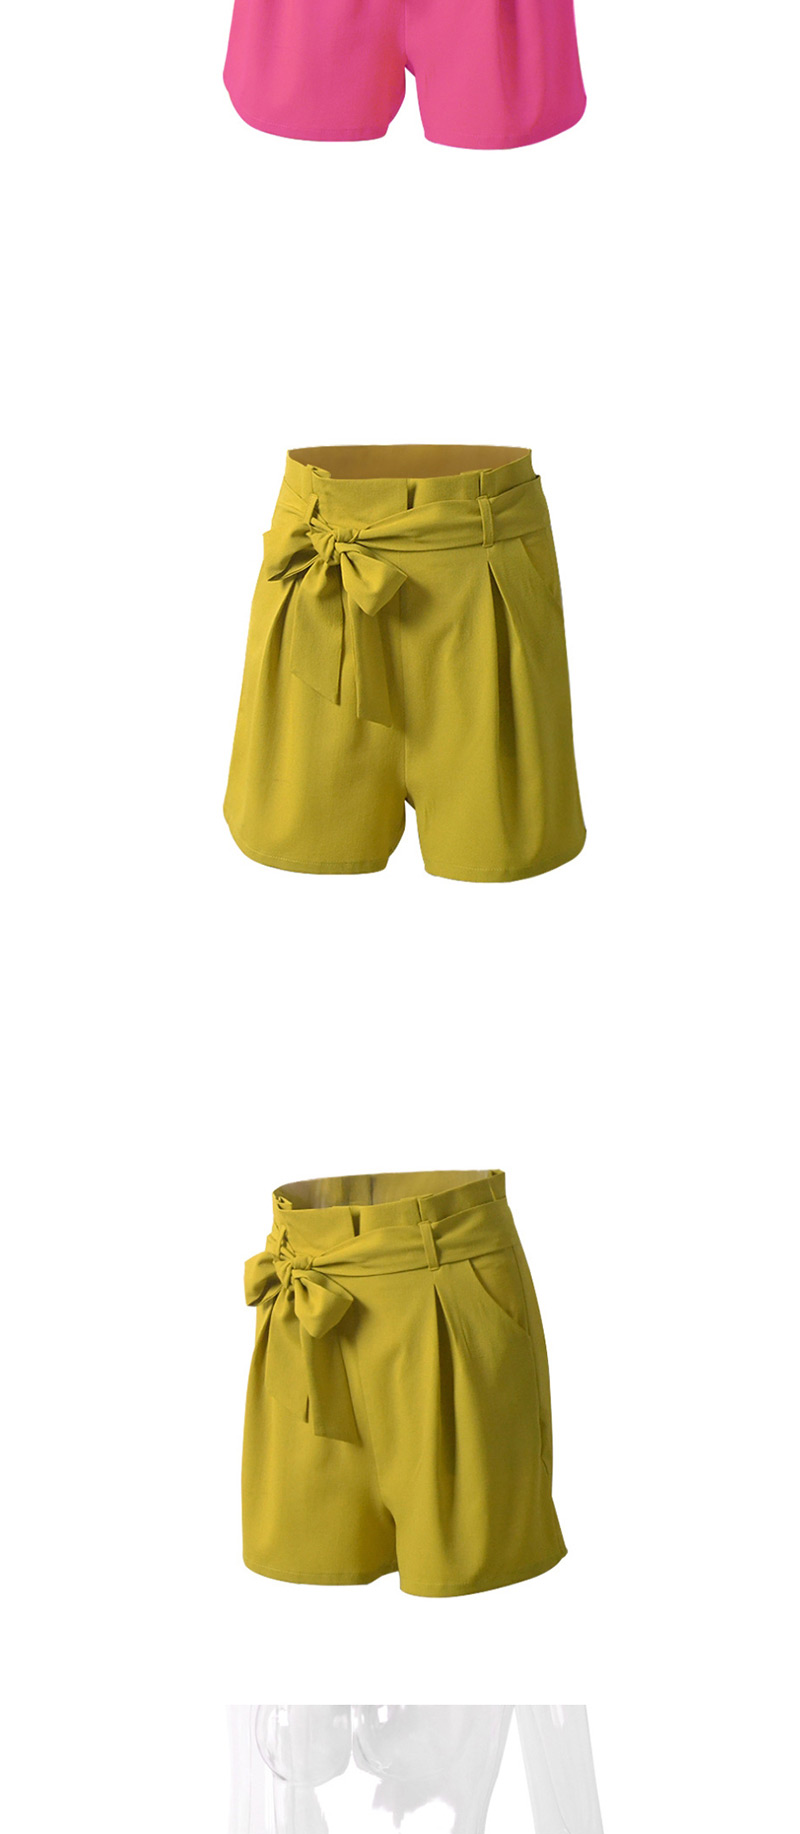 Fashion Ginger Yellow Solid Color Bandage High Waist Shorts,Shorts